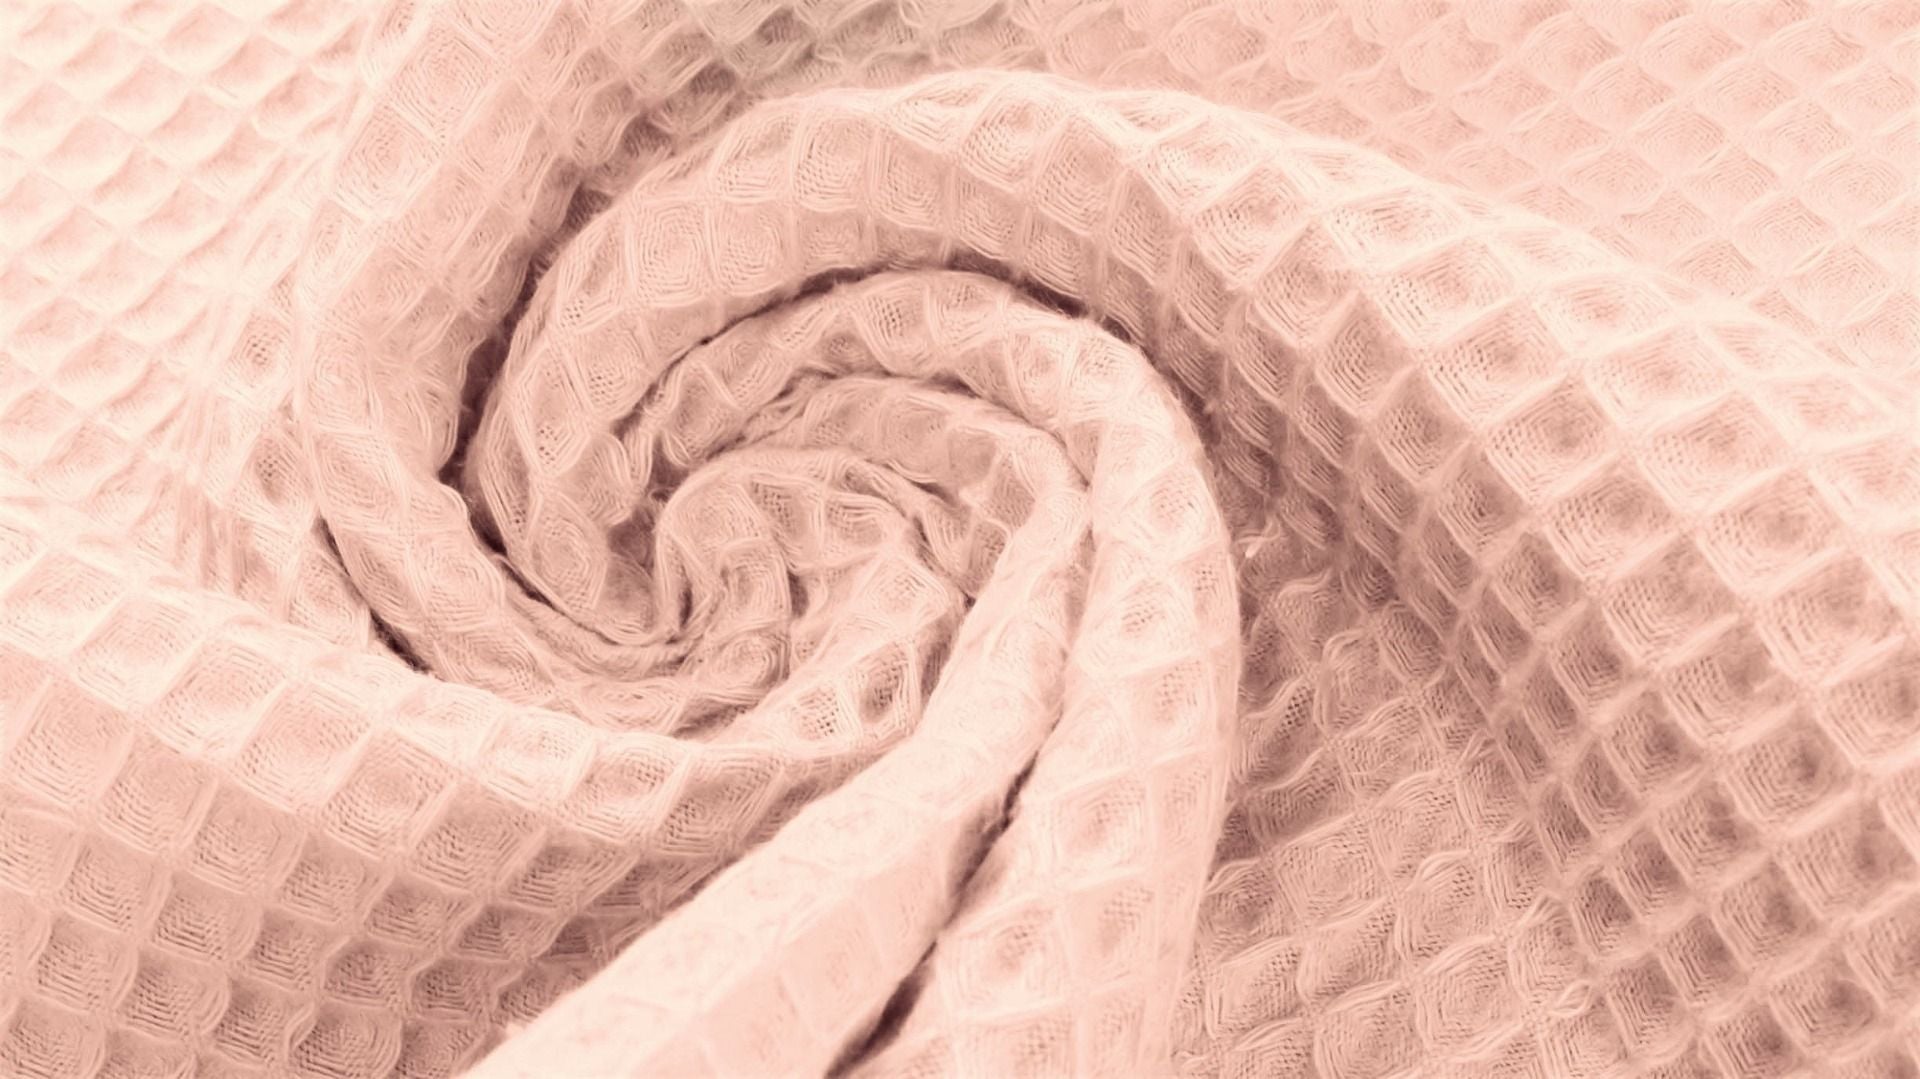 waffle weave – Simplifi Fabric